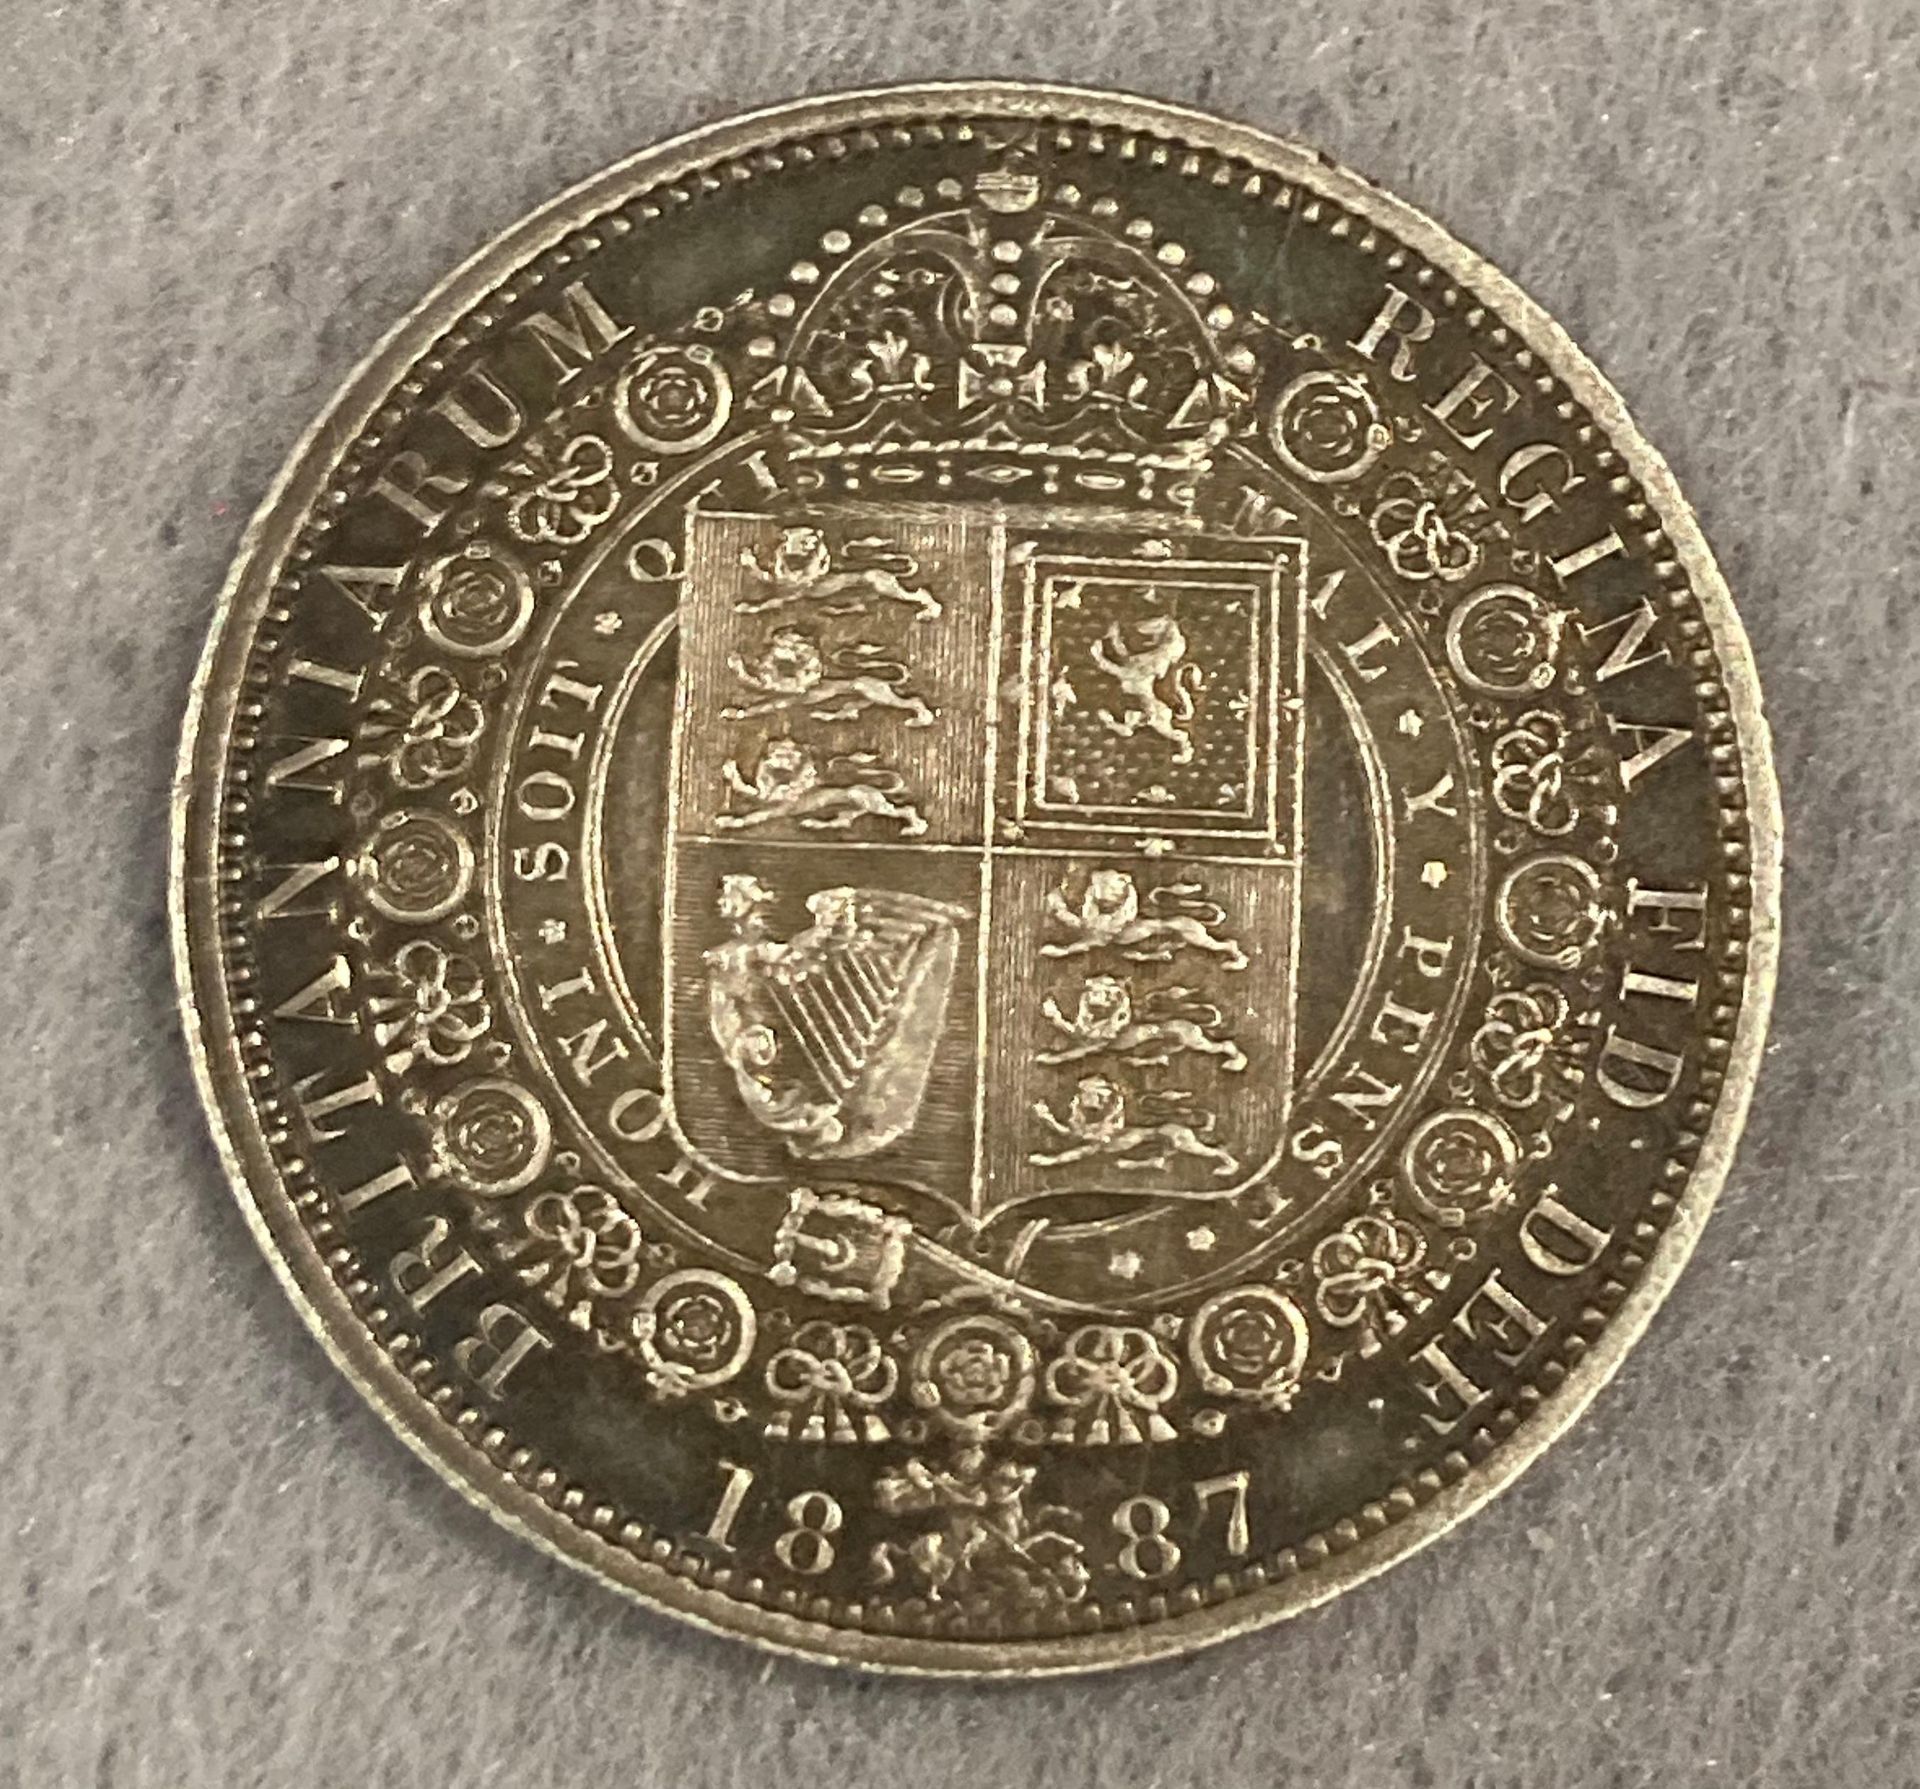 1887 Queen Victoria Half Crown Coin - Image 2 of 2